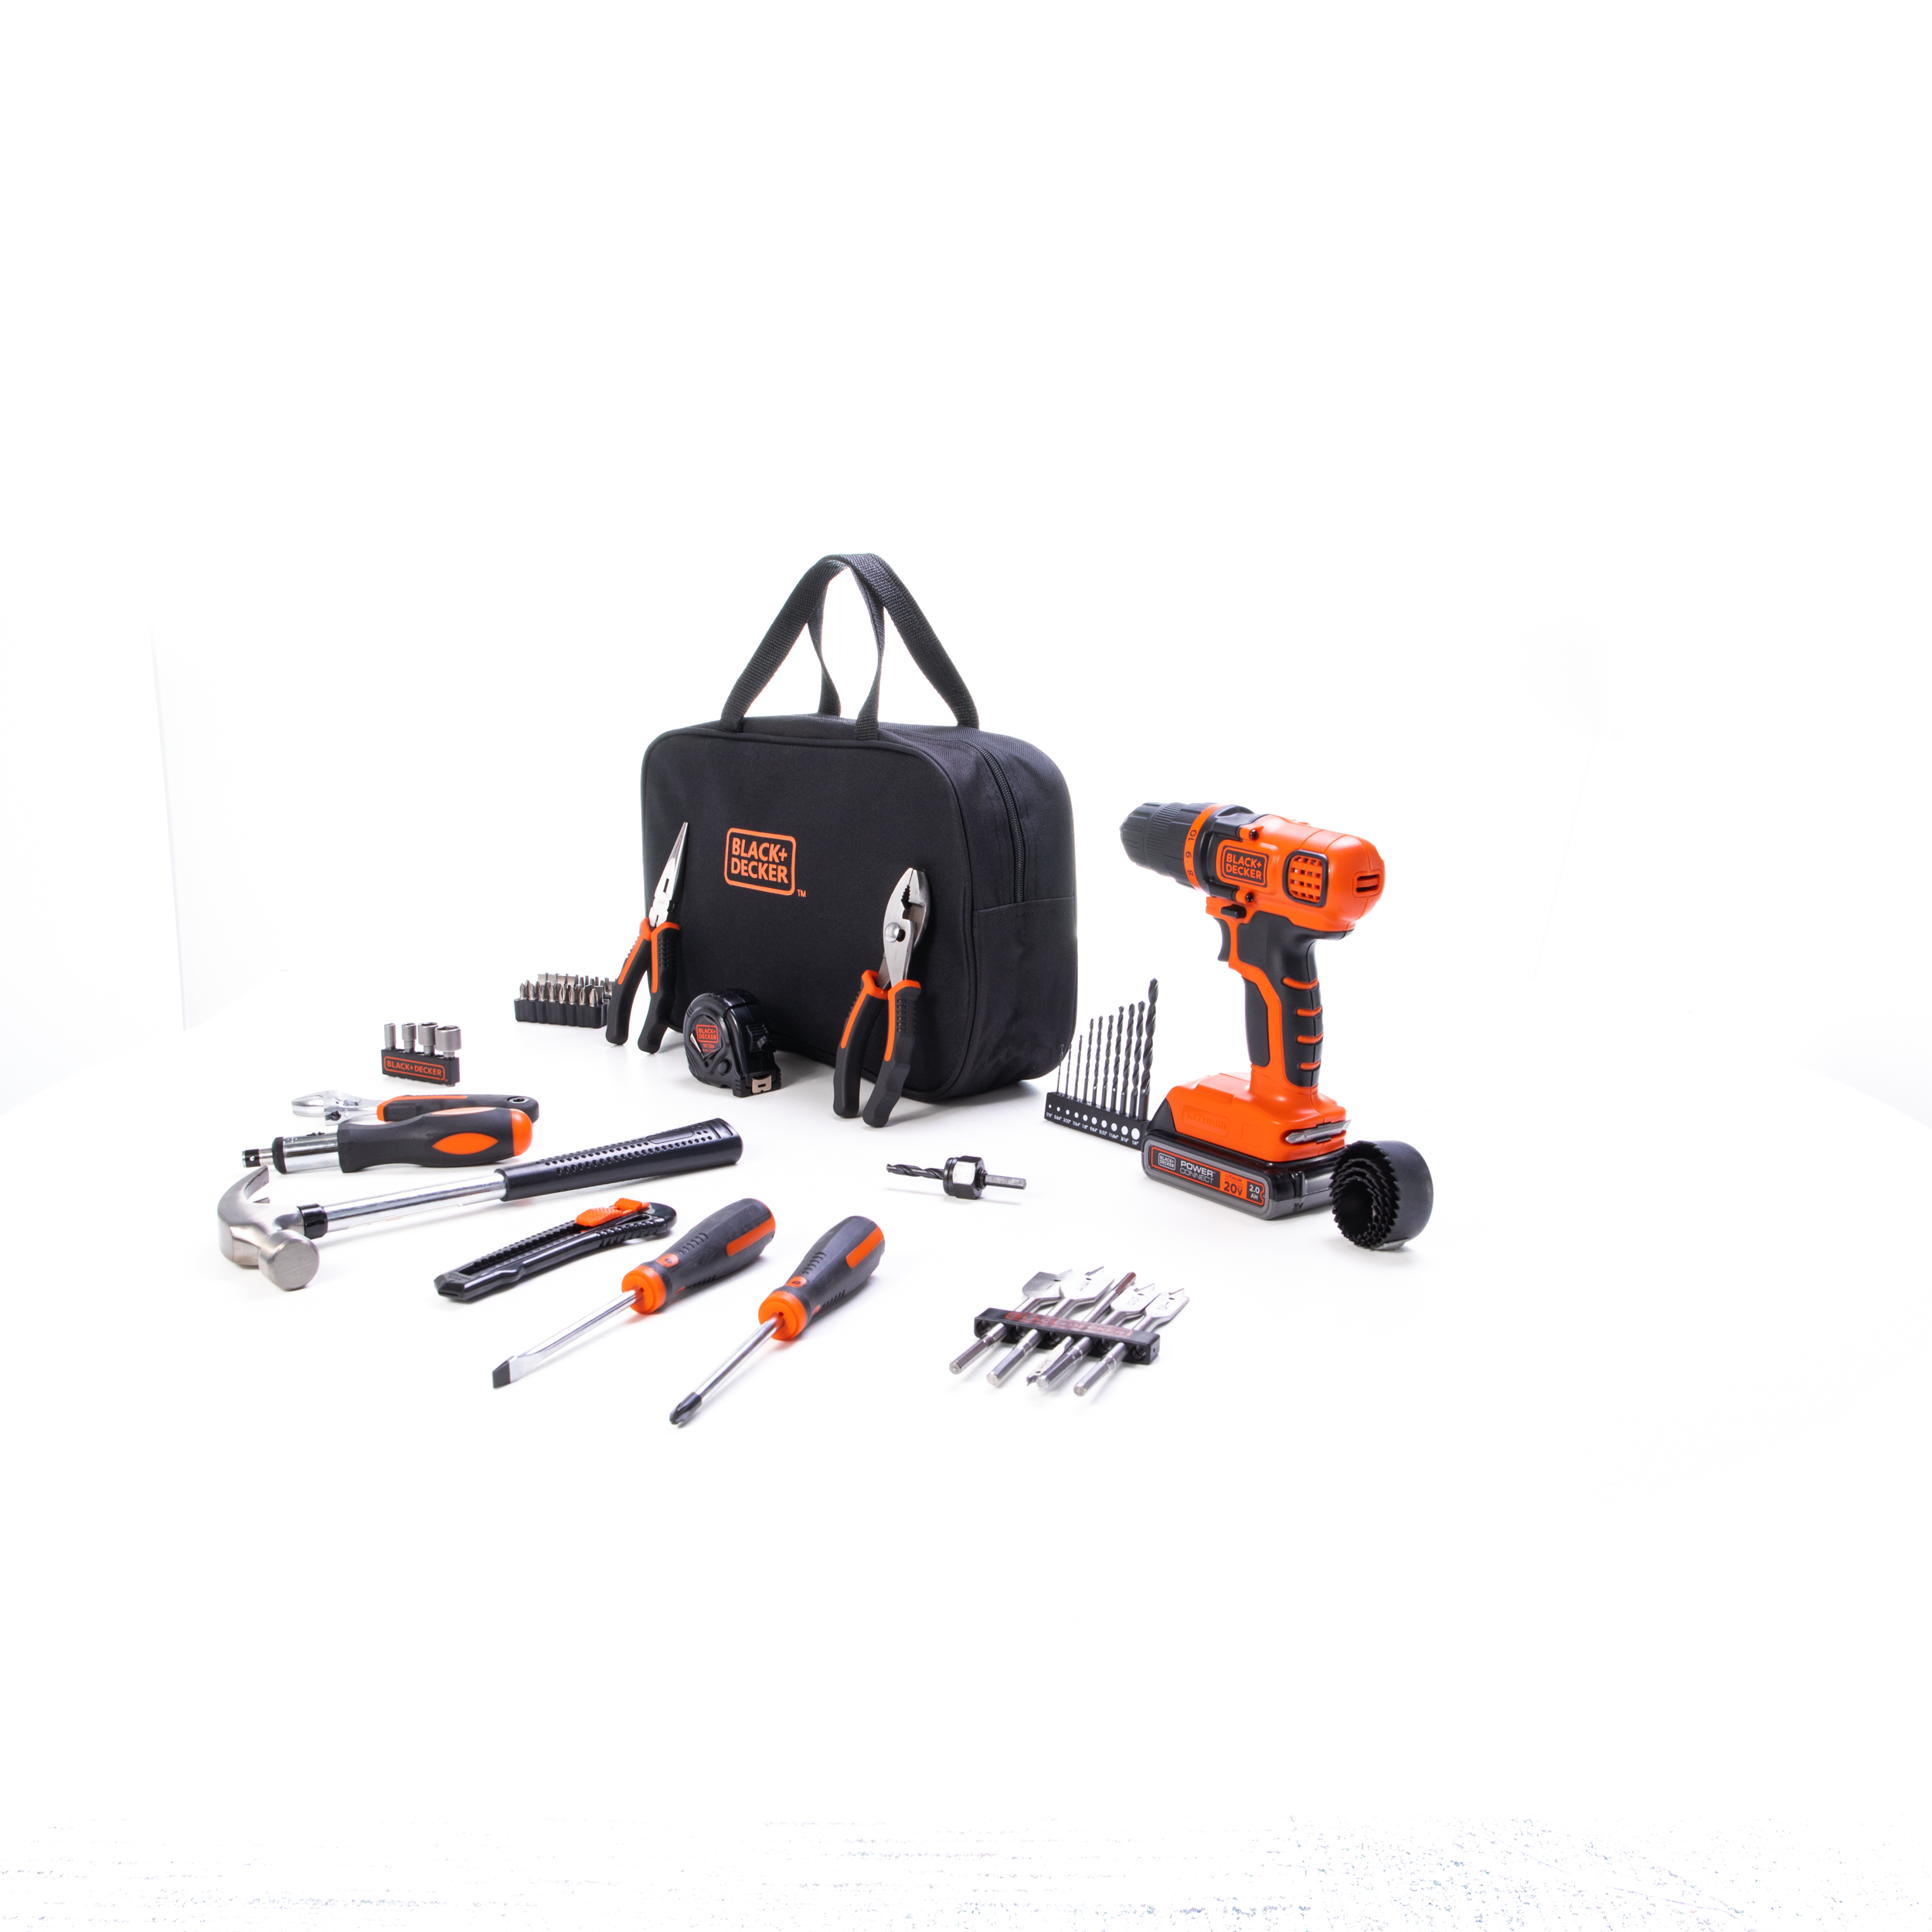 Black & Decker Bck50C1 50pc 20V Drill Tool Set